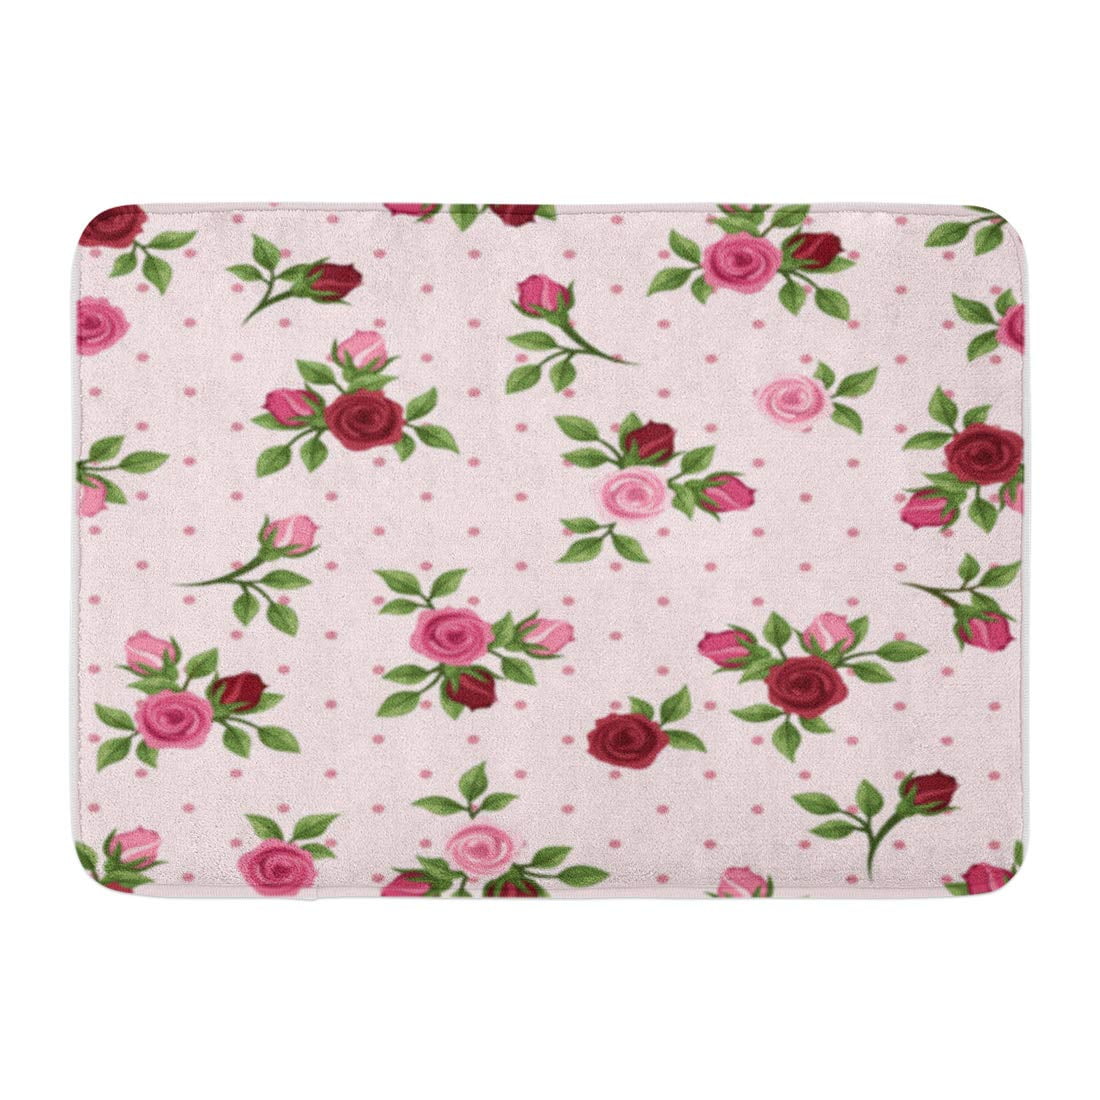 15X23" Red Rose Flower Kitchen Bathroom Floor Non-Slip Bath Mat Rug Carpets 3782 